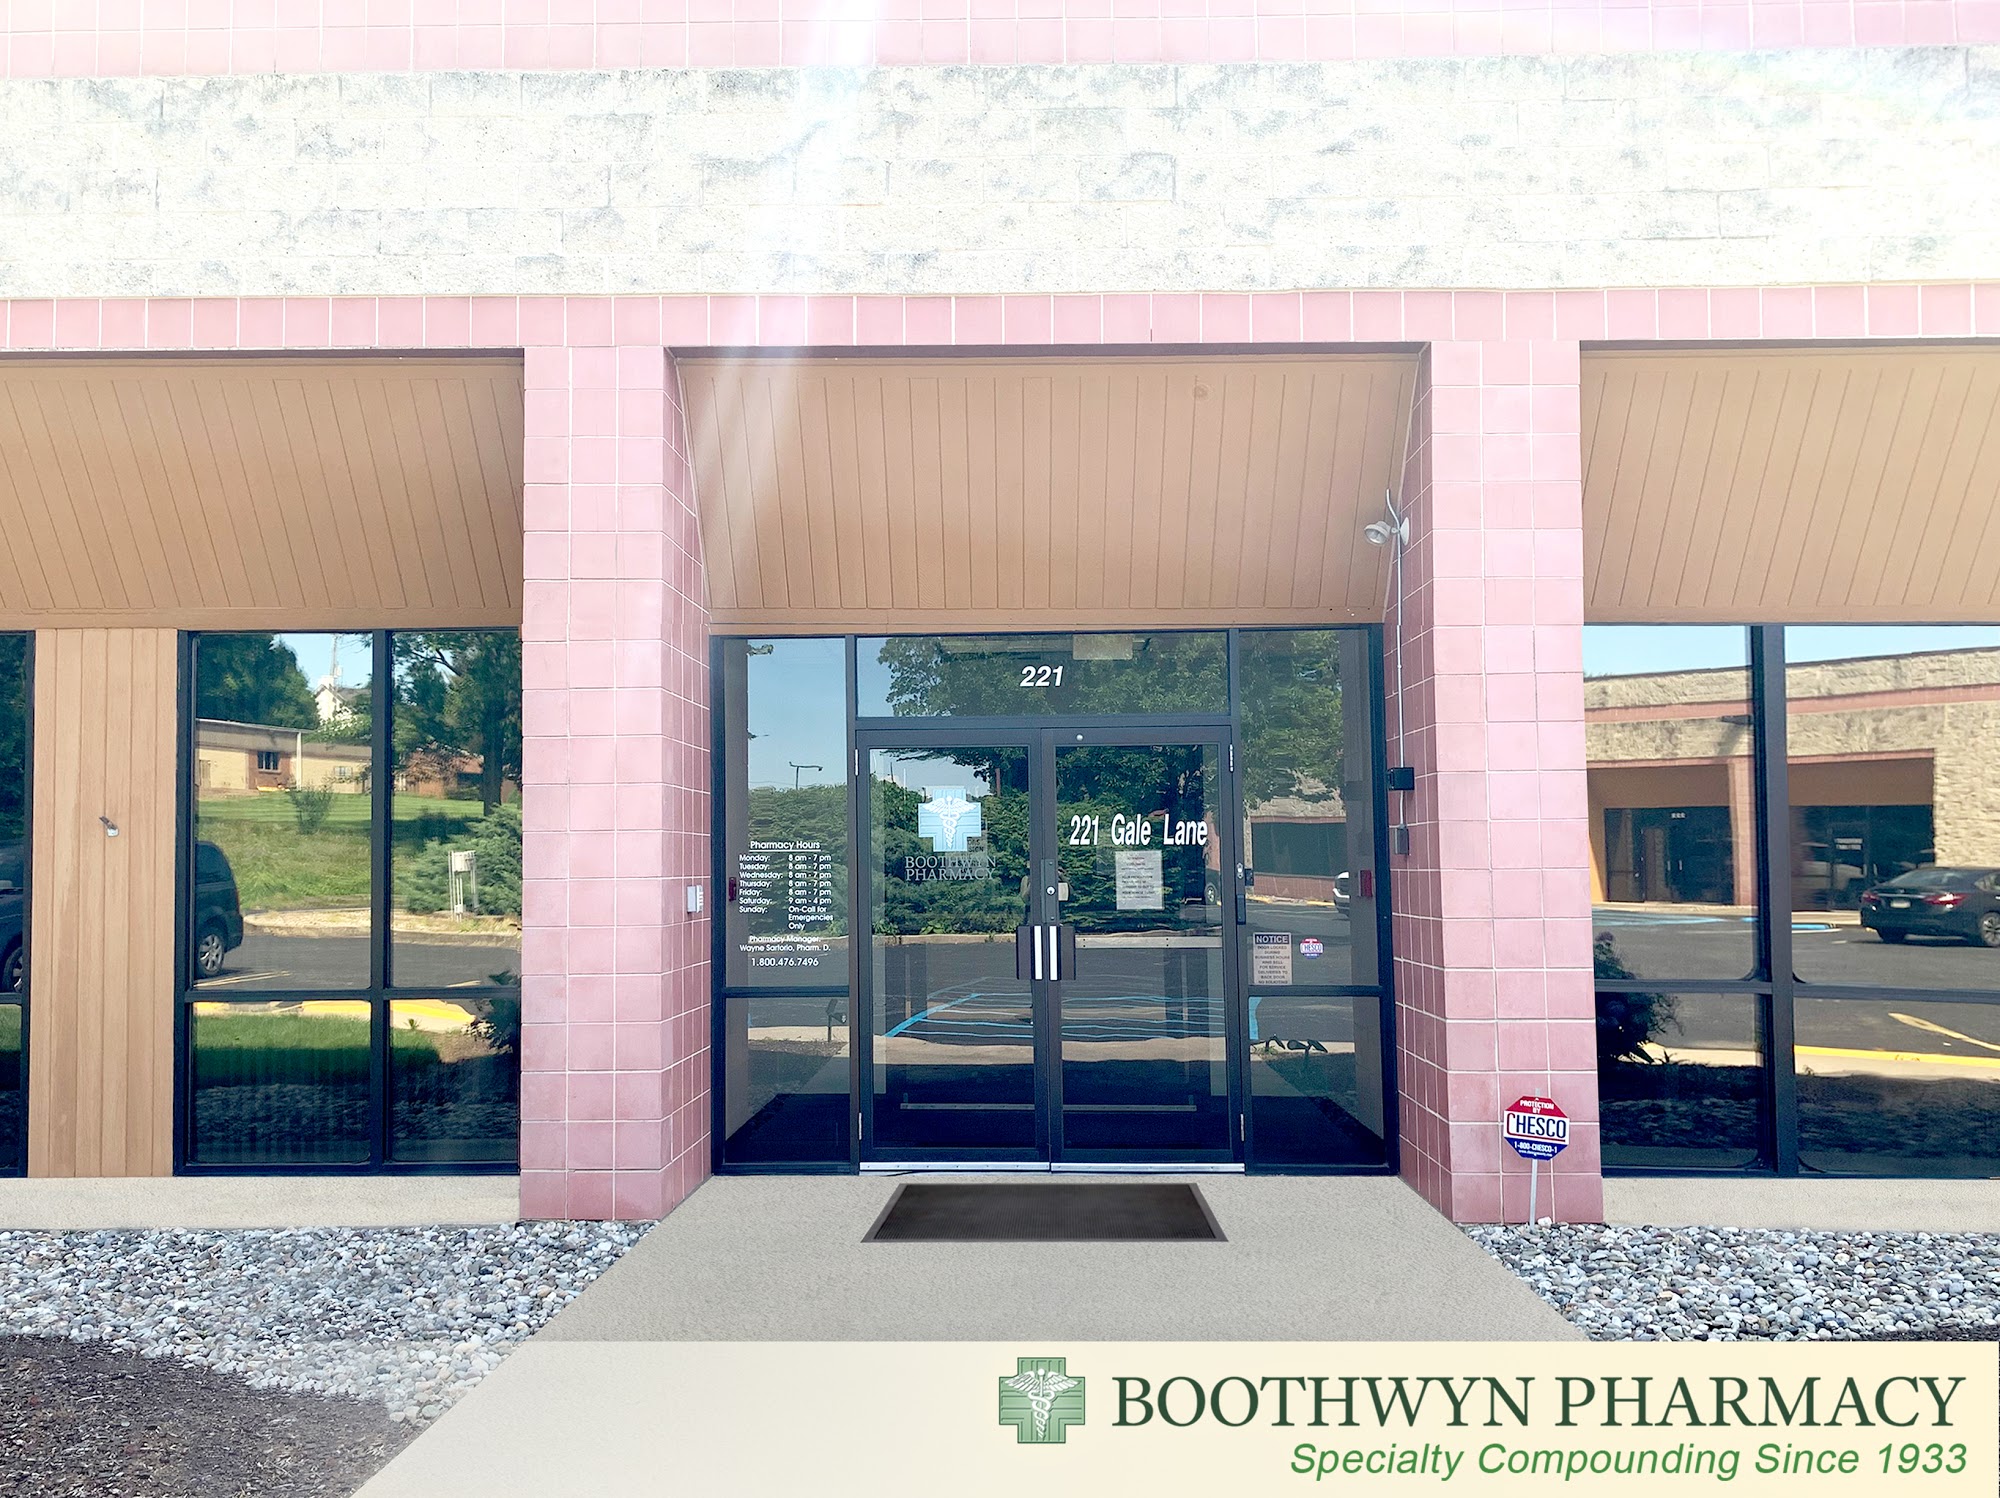 Boothwyn Pharmacy